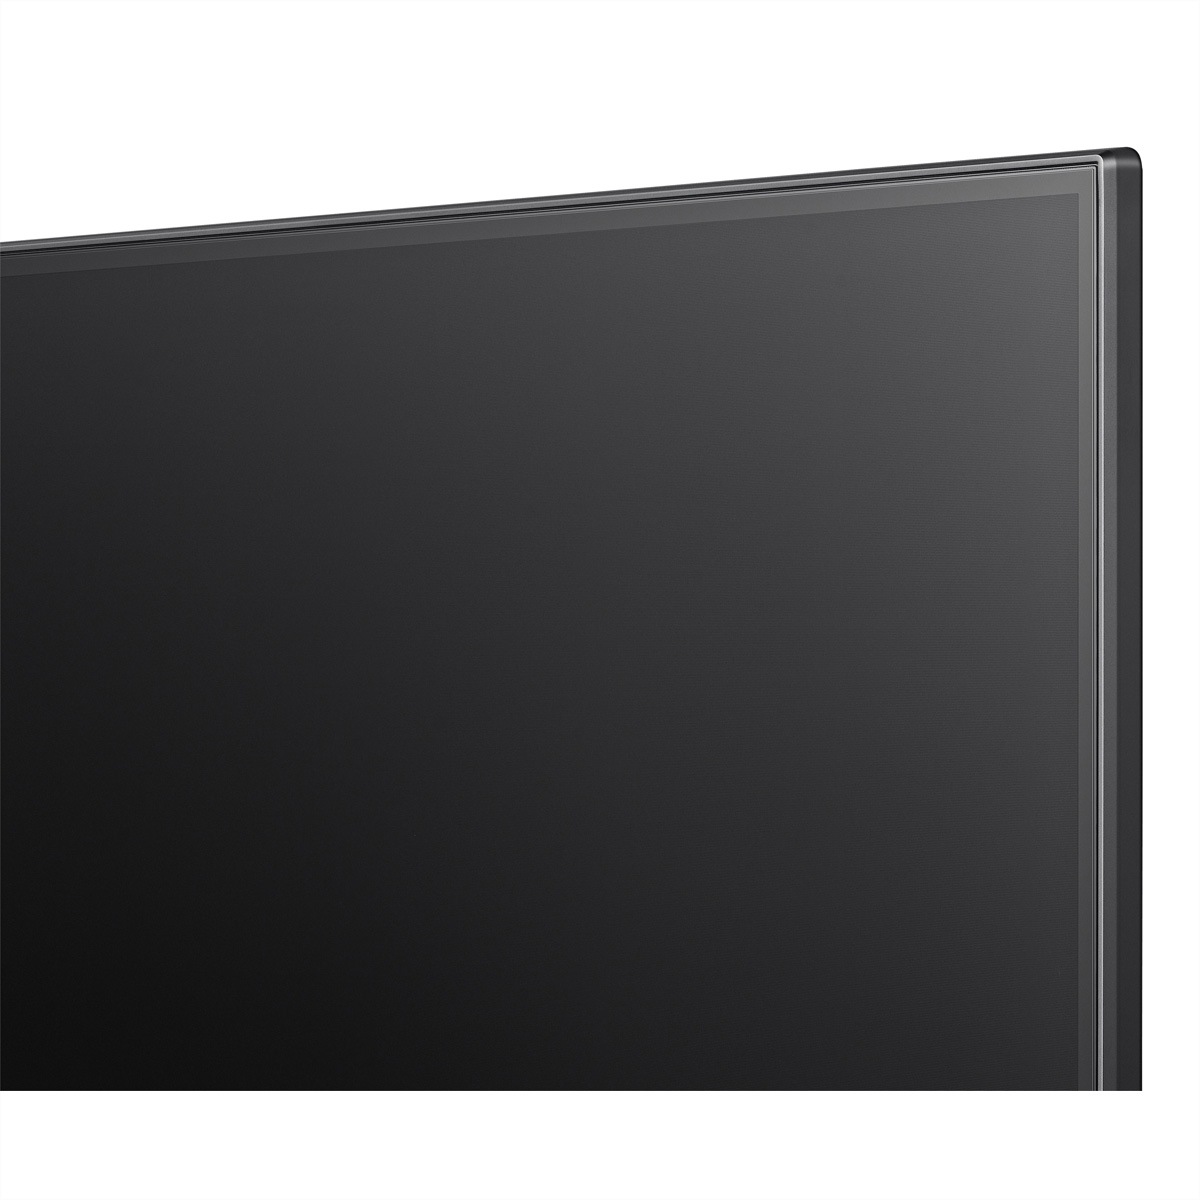 Hisense LED-Fernseher »Hisense TV 75U8KQ, 75", ULED 4K, Mini LED, 1500 Nit, 144 Hz«, 191 cm/75 Zoll